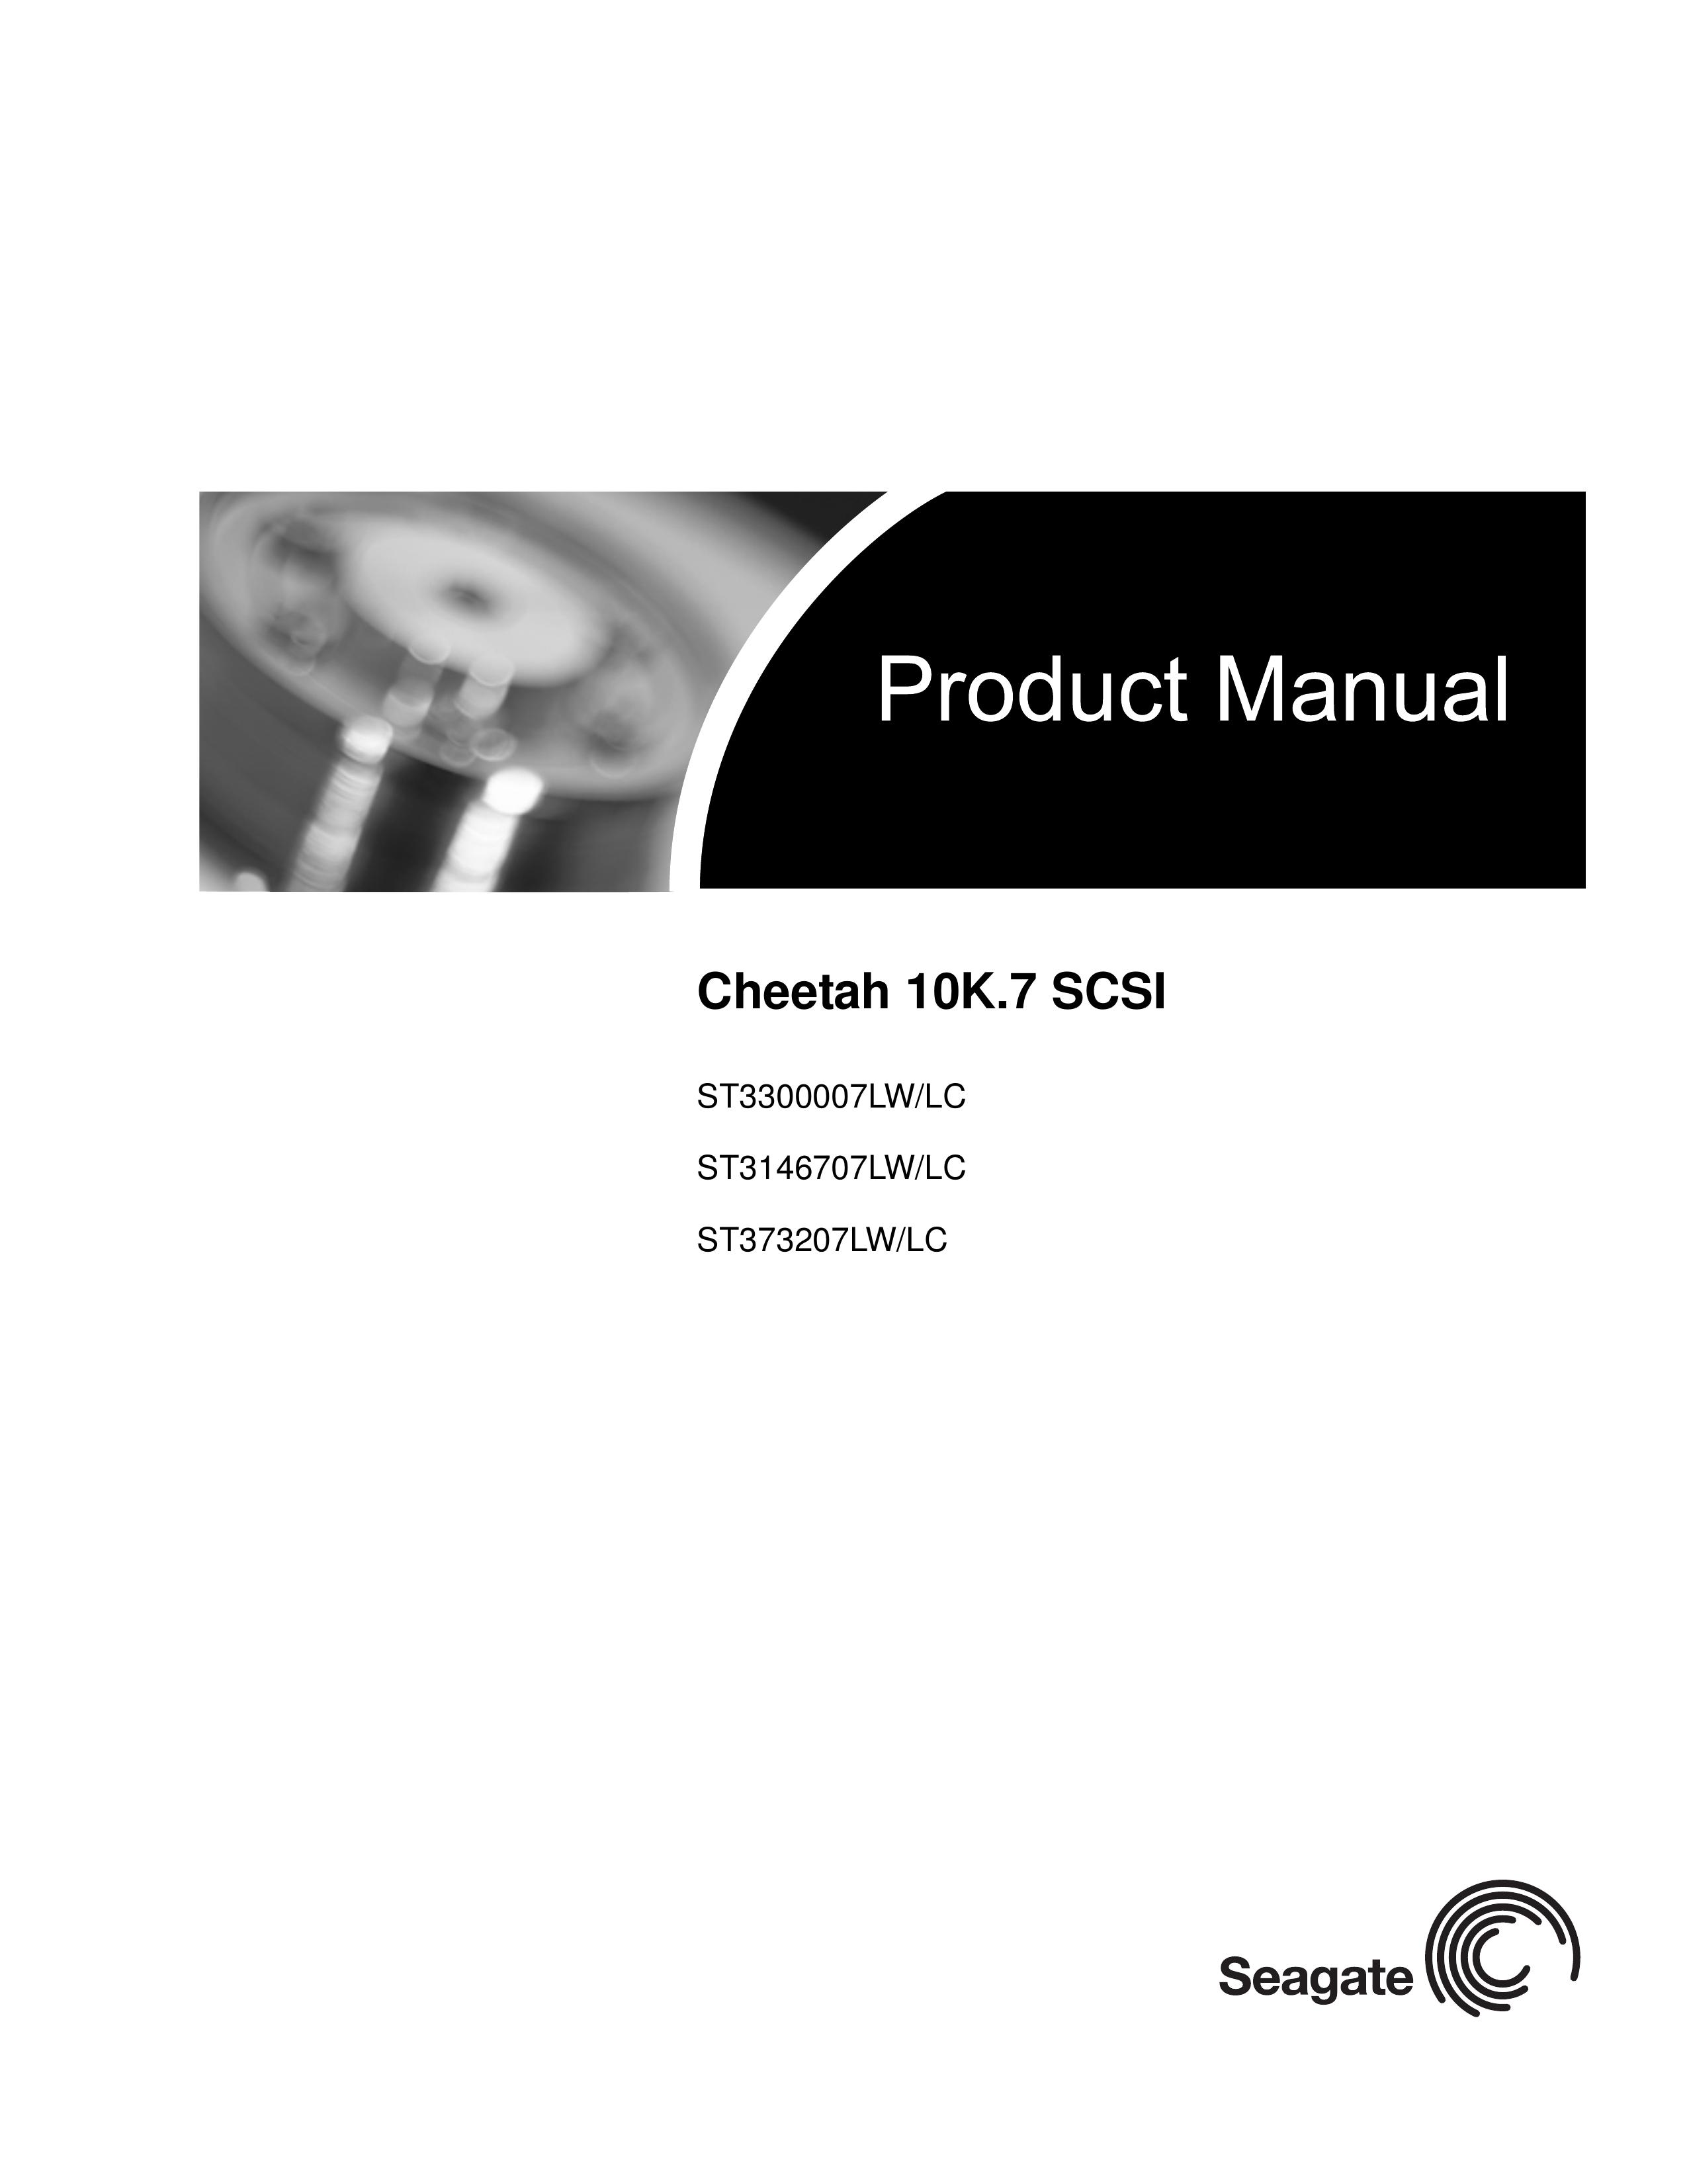 Seagate ST373207LW/LC Brush Cutter User Manual